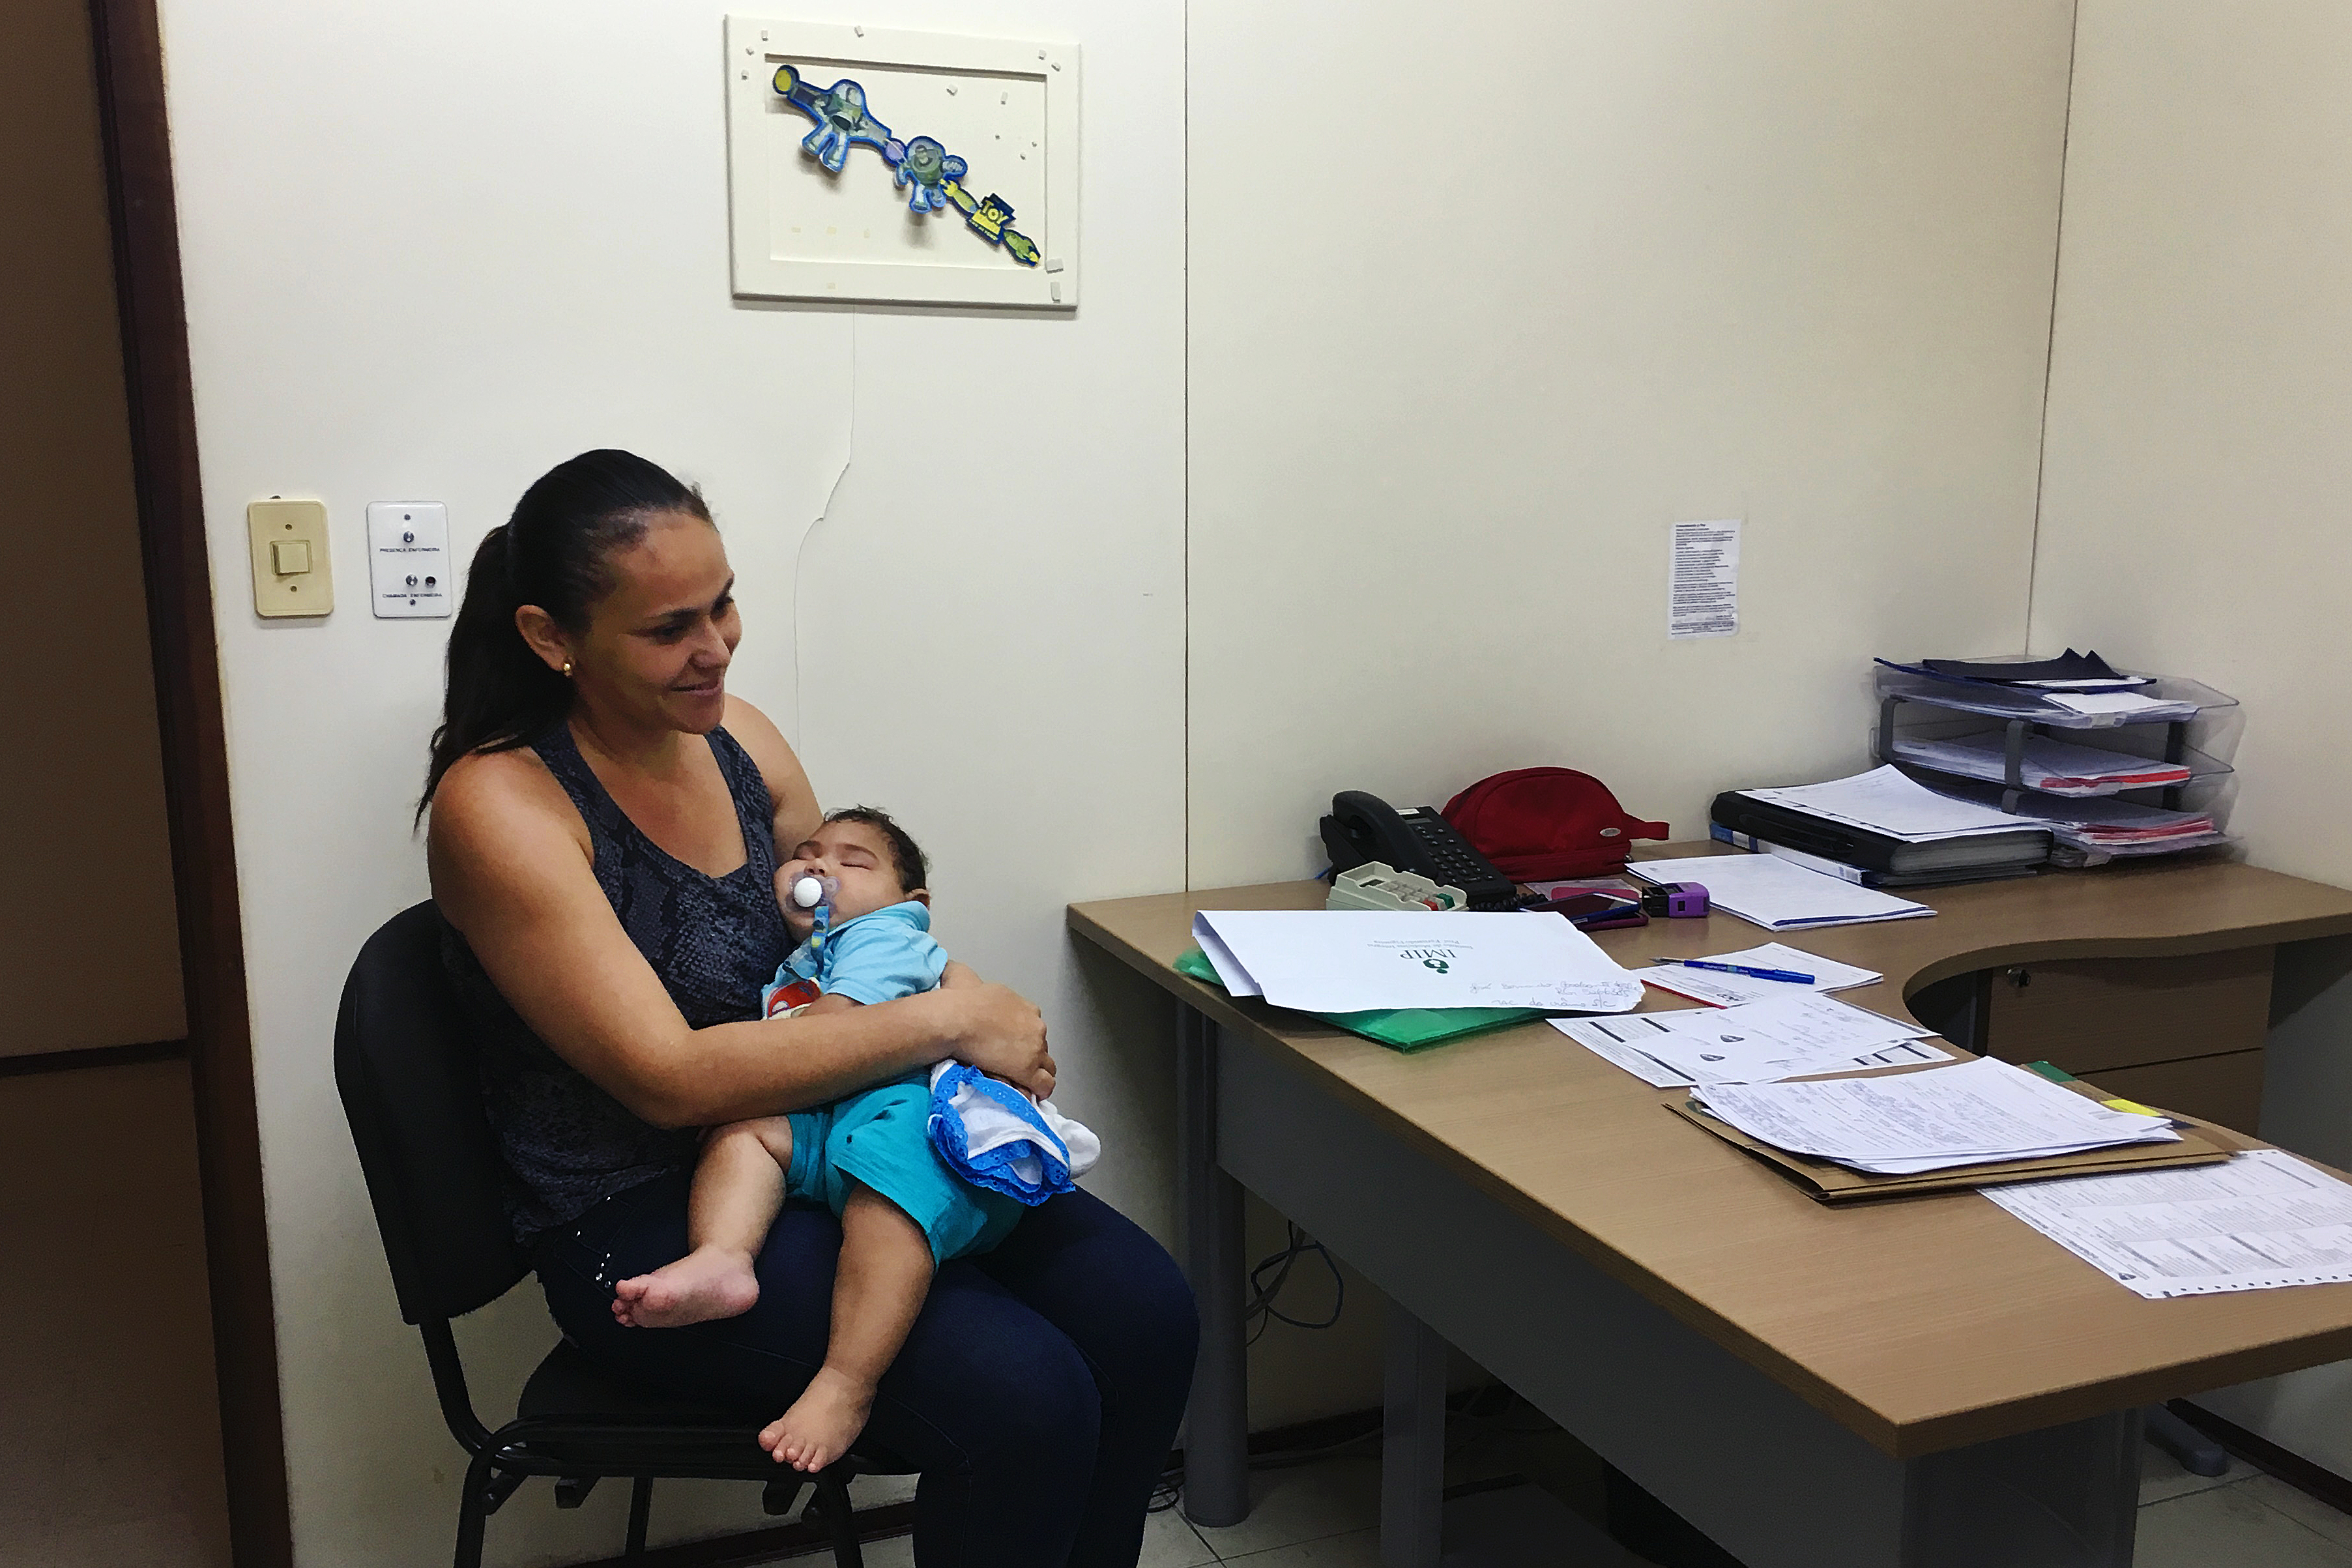 Adriana Cordeiro da Silva, 29, and her seven-month-year-old son Jose Bernardo, who was born with microcephaly, at the Associacao de Assistencia a Crianca Deficiente rehabilitation center in Recife, Brazil. (Alexandra Sifferlin for TIME)